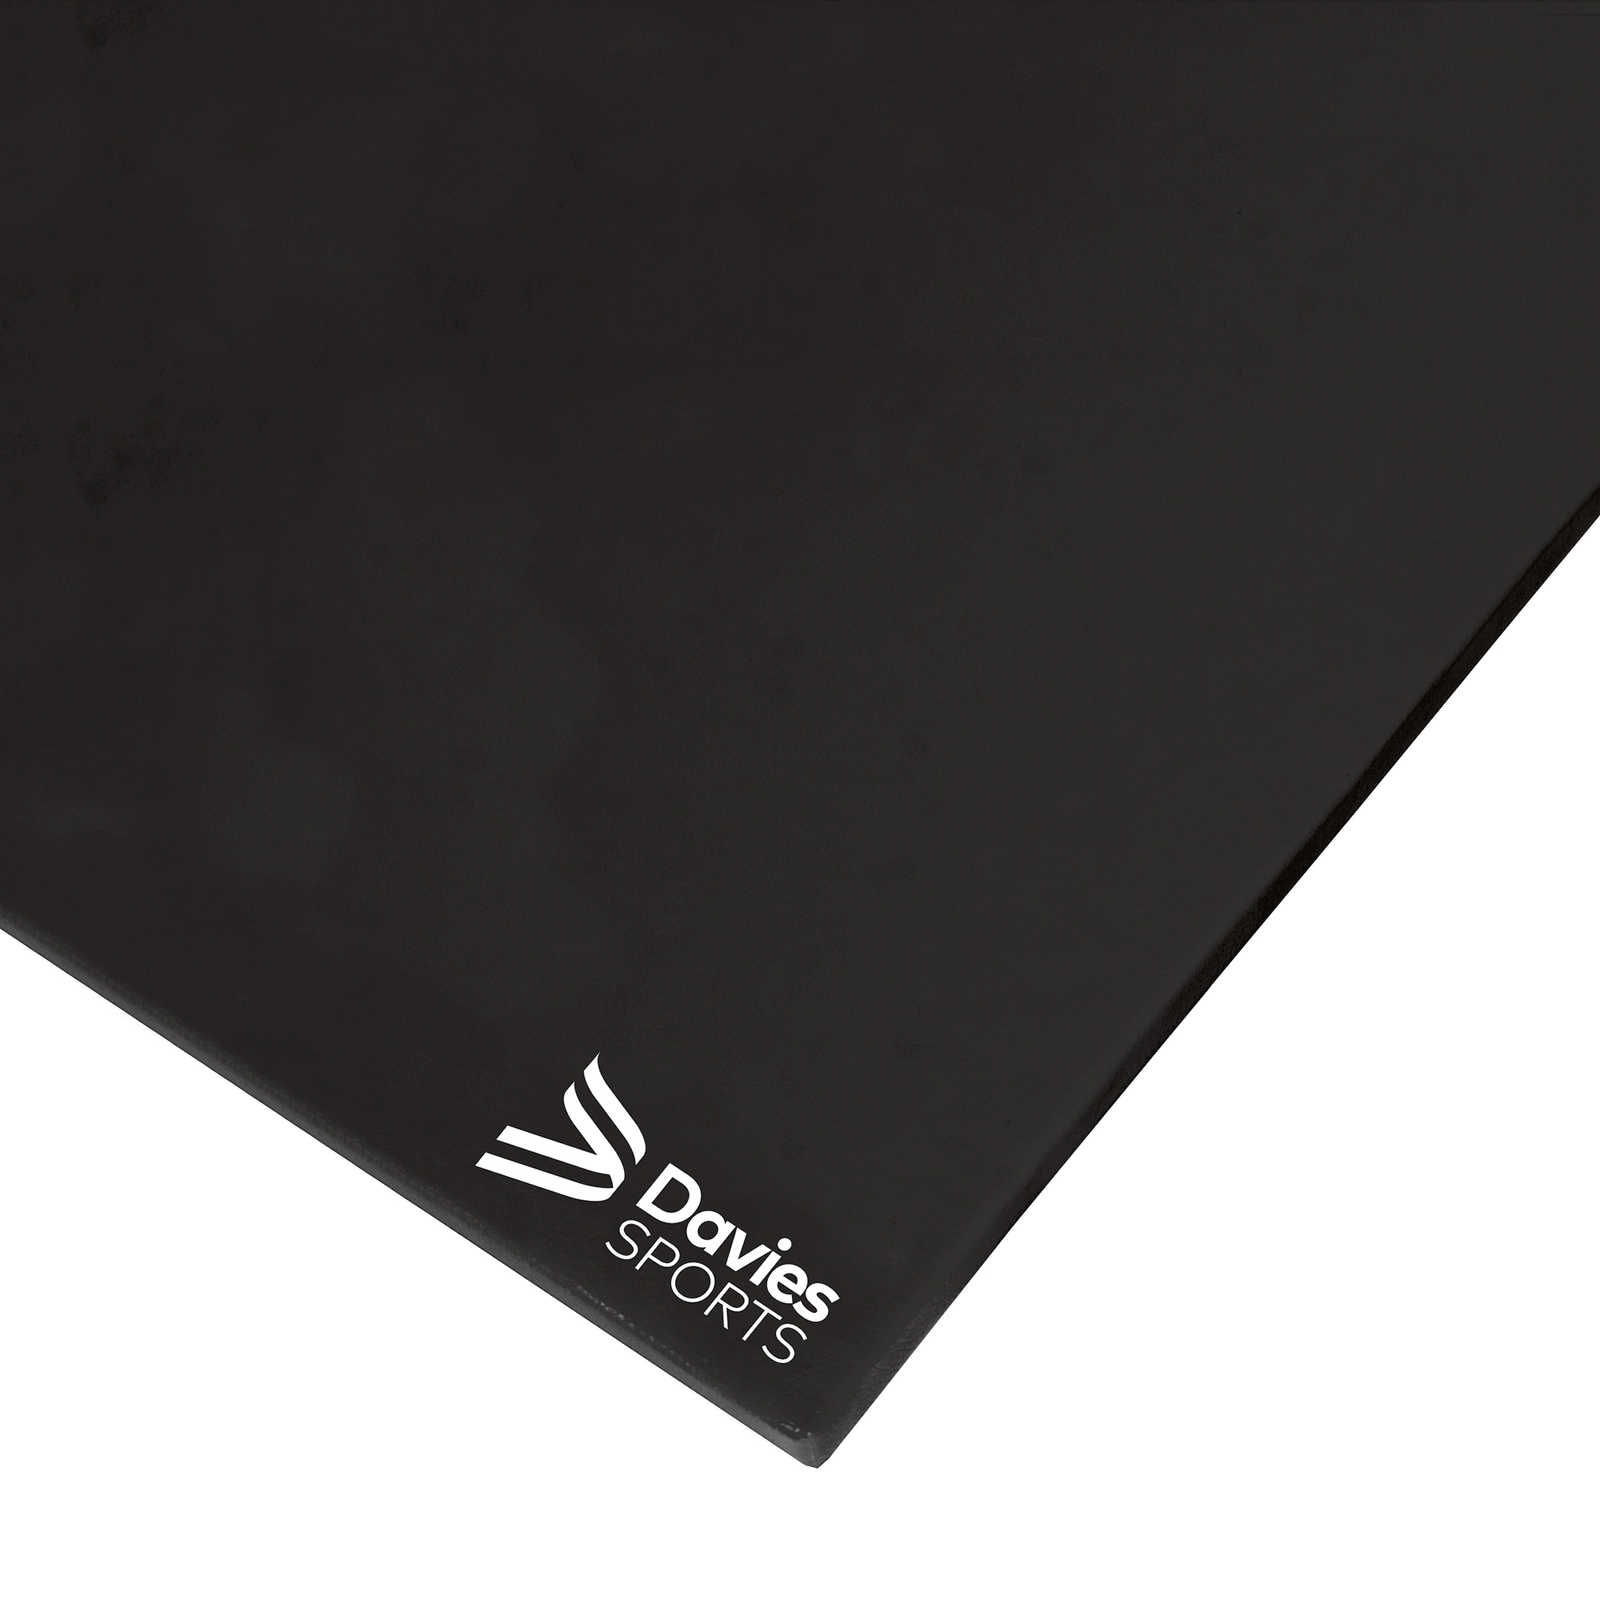 Davies Sports Lightweight Gym Mat Standard Black - 1.22m x 0.91m x 32mm